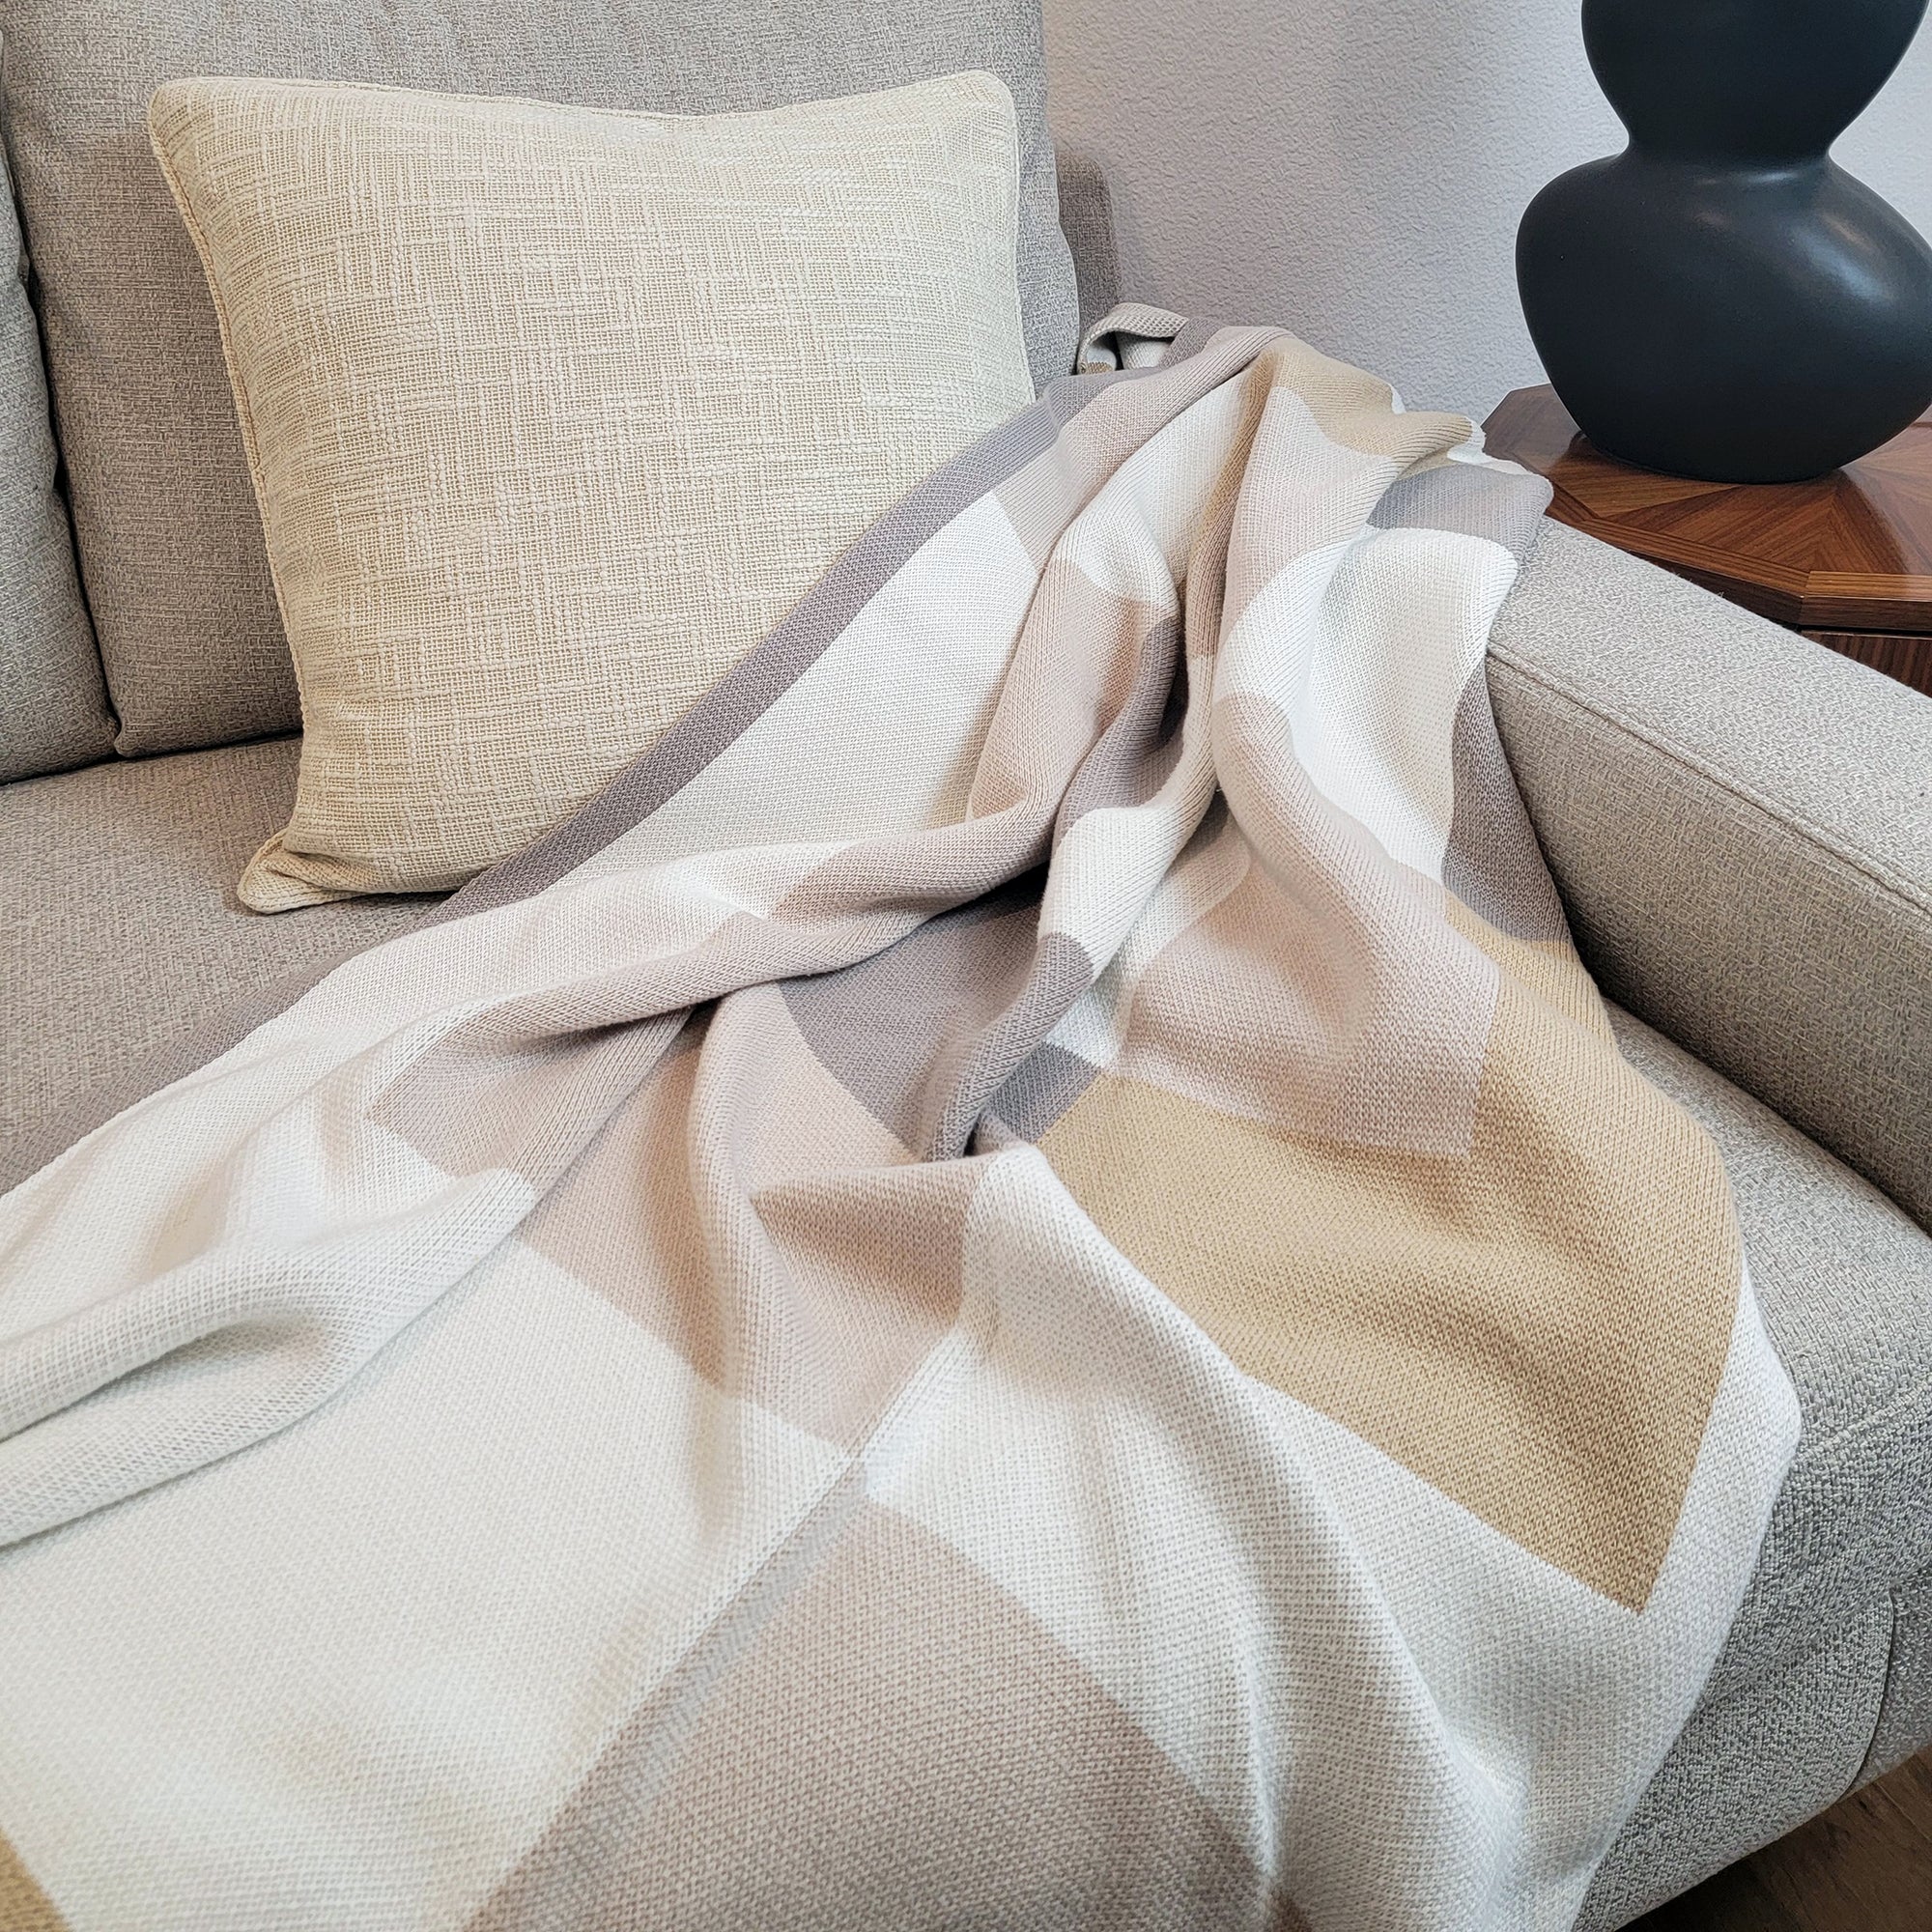 Neutral geometric throw blanket and cream textured cotton pillow